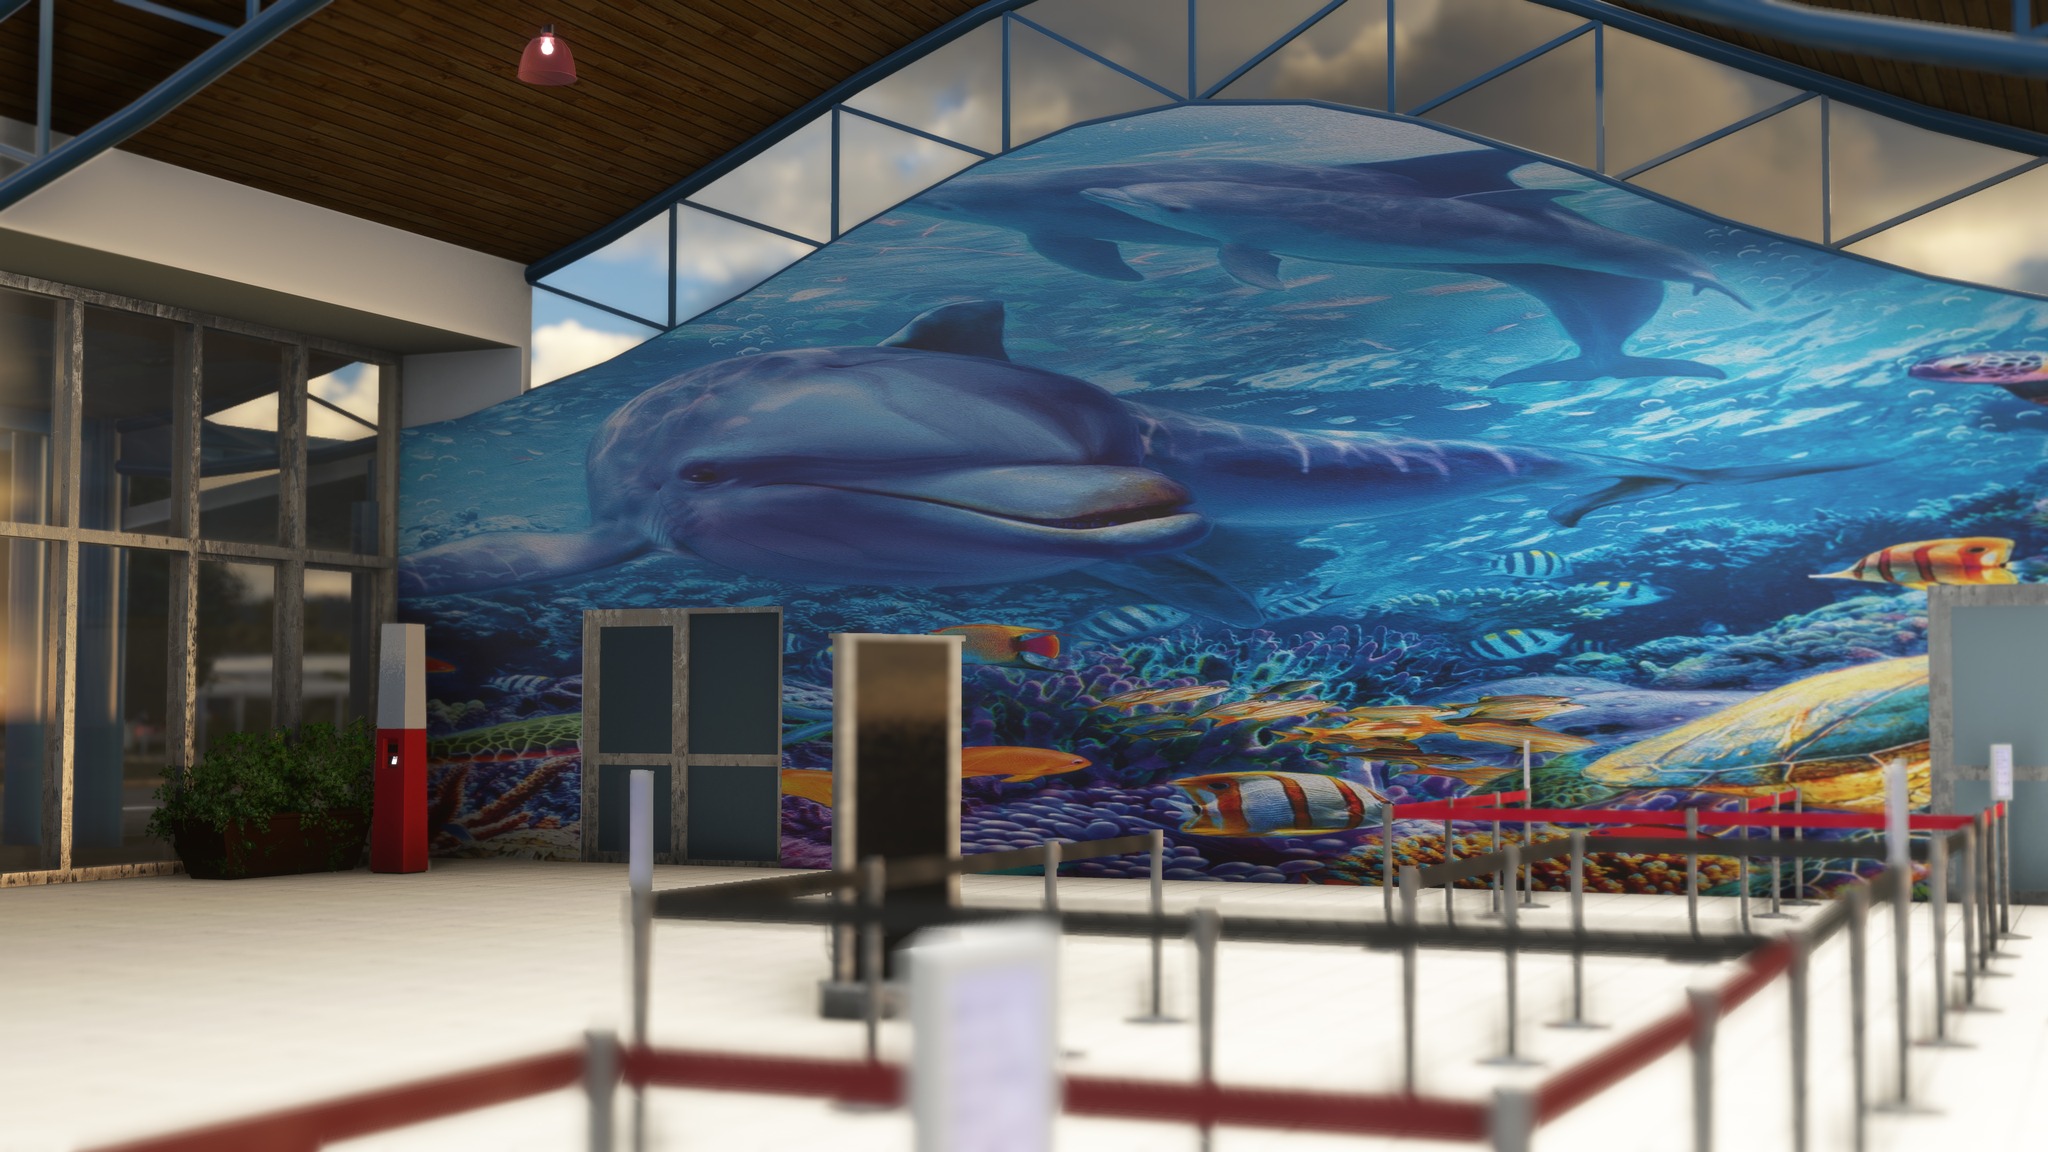 Impulse Simulations Releases Coffs Harbour Airport for MSFS - Impulse Simulations, Microsoft Flight Simulator